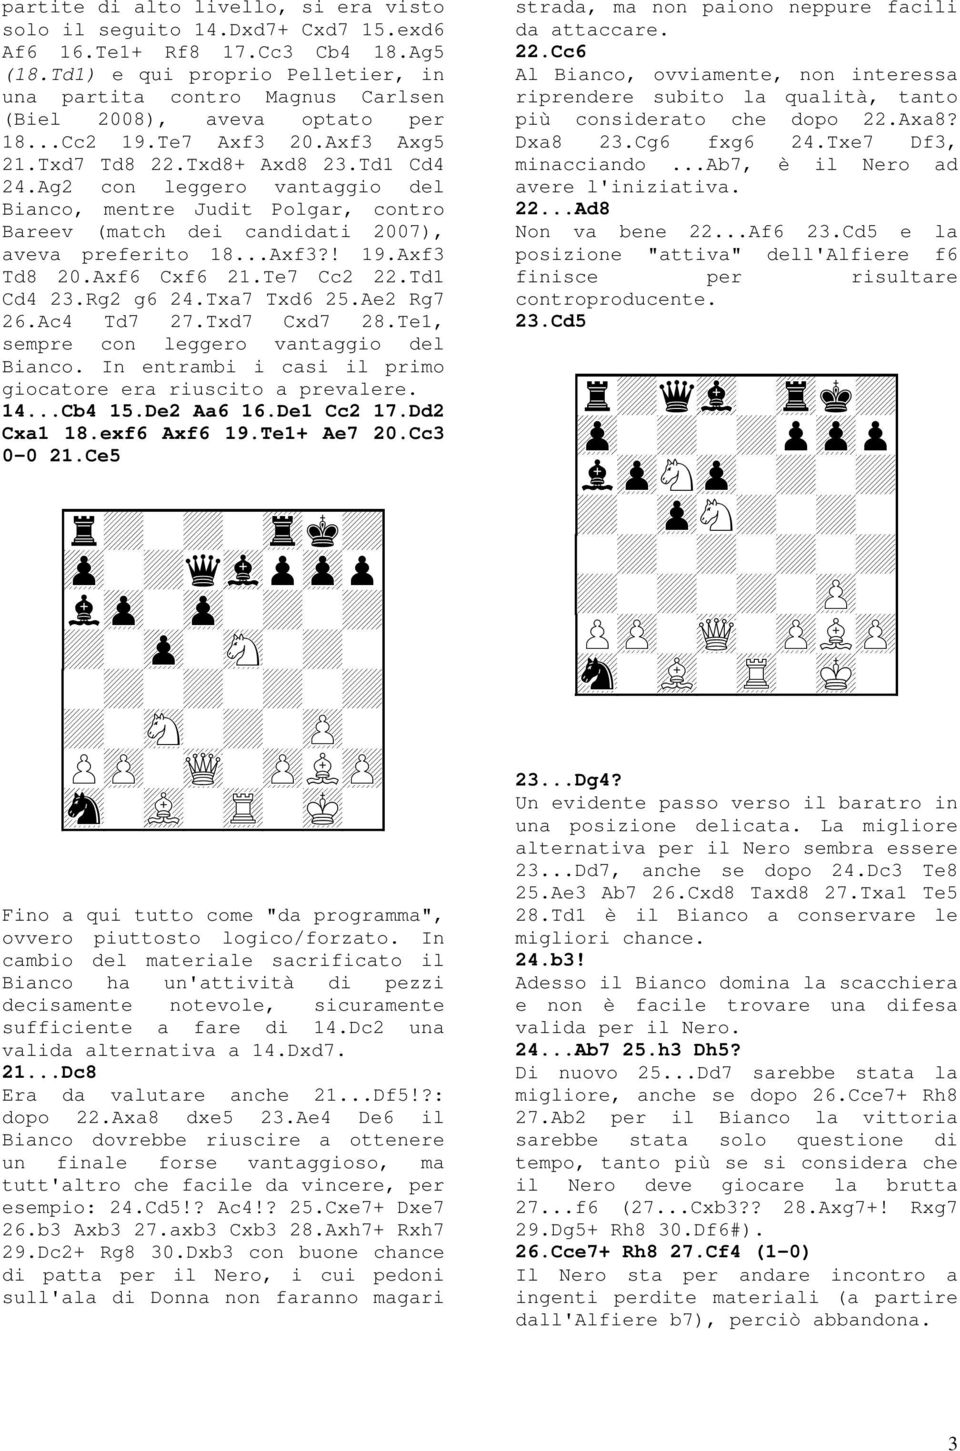 Ag2 con leggero vantaggio del Bianco, mentre Judit Polgar, contro Bareev (match dei candidati 2007), aveva preferito 18...Axf3?! 19.Axf3 Td8 20.Axf6 Cxf6 21.Te7 Cc2 22.Td1 Cd4 23.Rg2 g6 24.